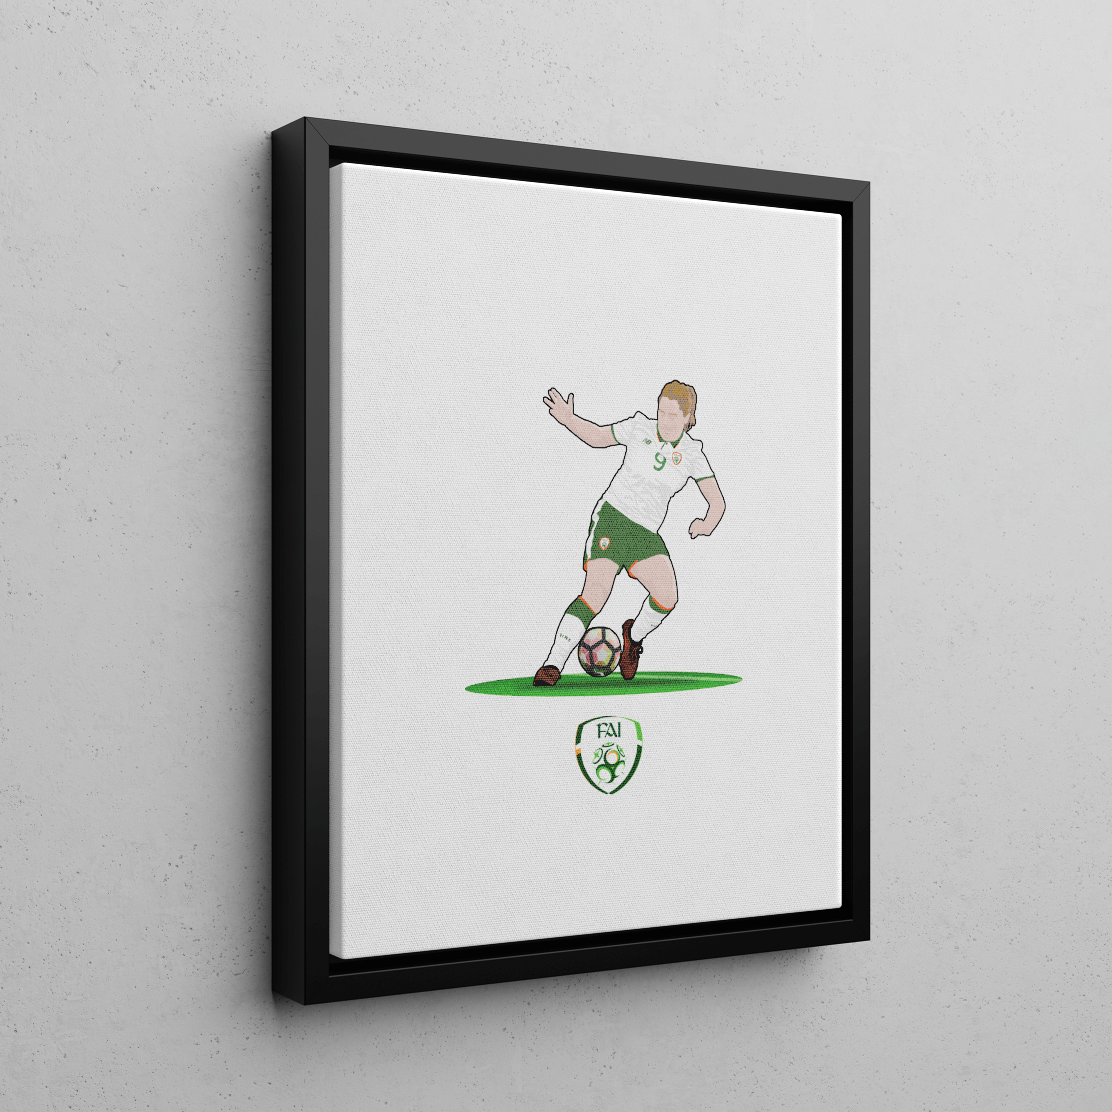 Commission - Framed Canvas - Soccer